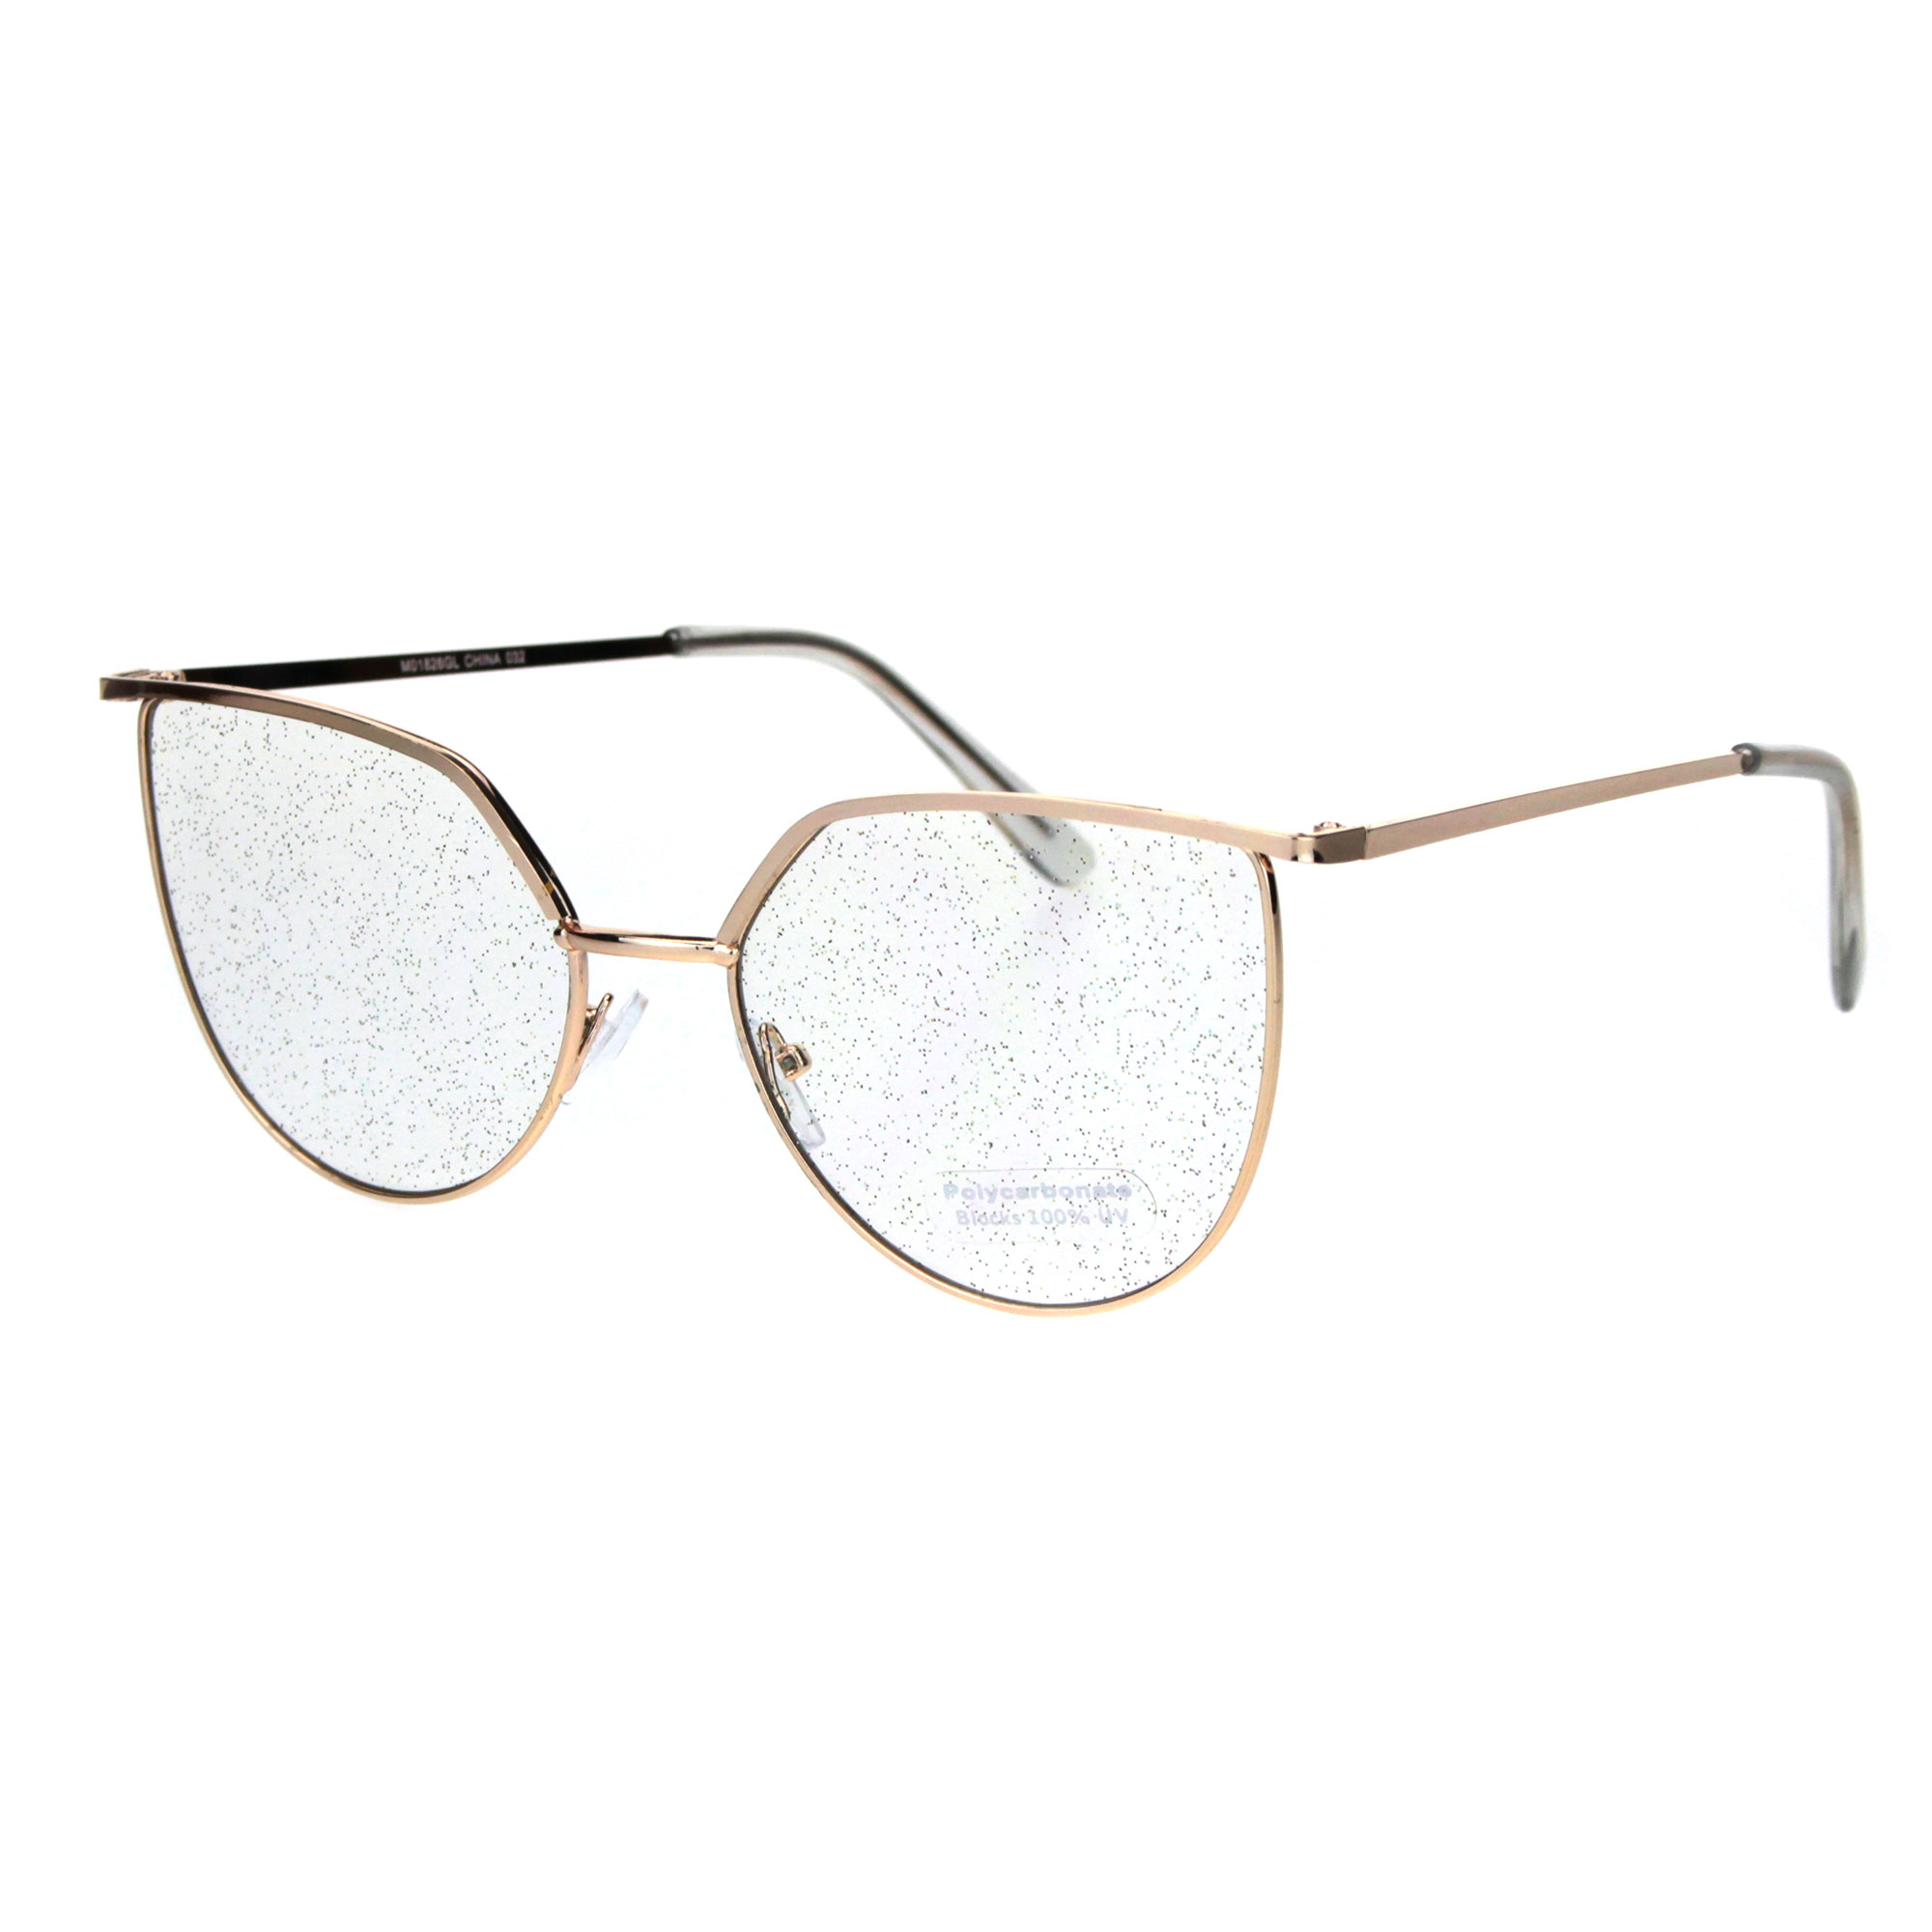 Womens Glitter Lens Retro Fashion Metal Rim Squared Cat Eye Sunglasses Gold Clear - image 2 of 4